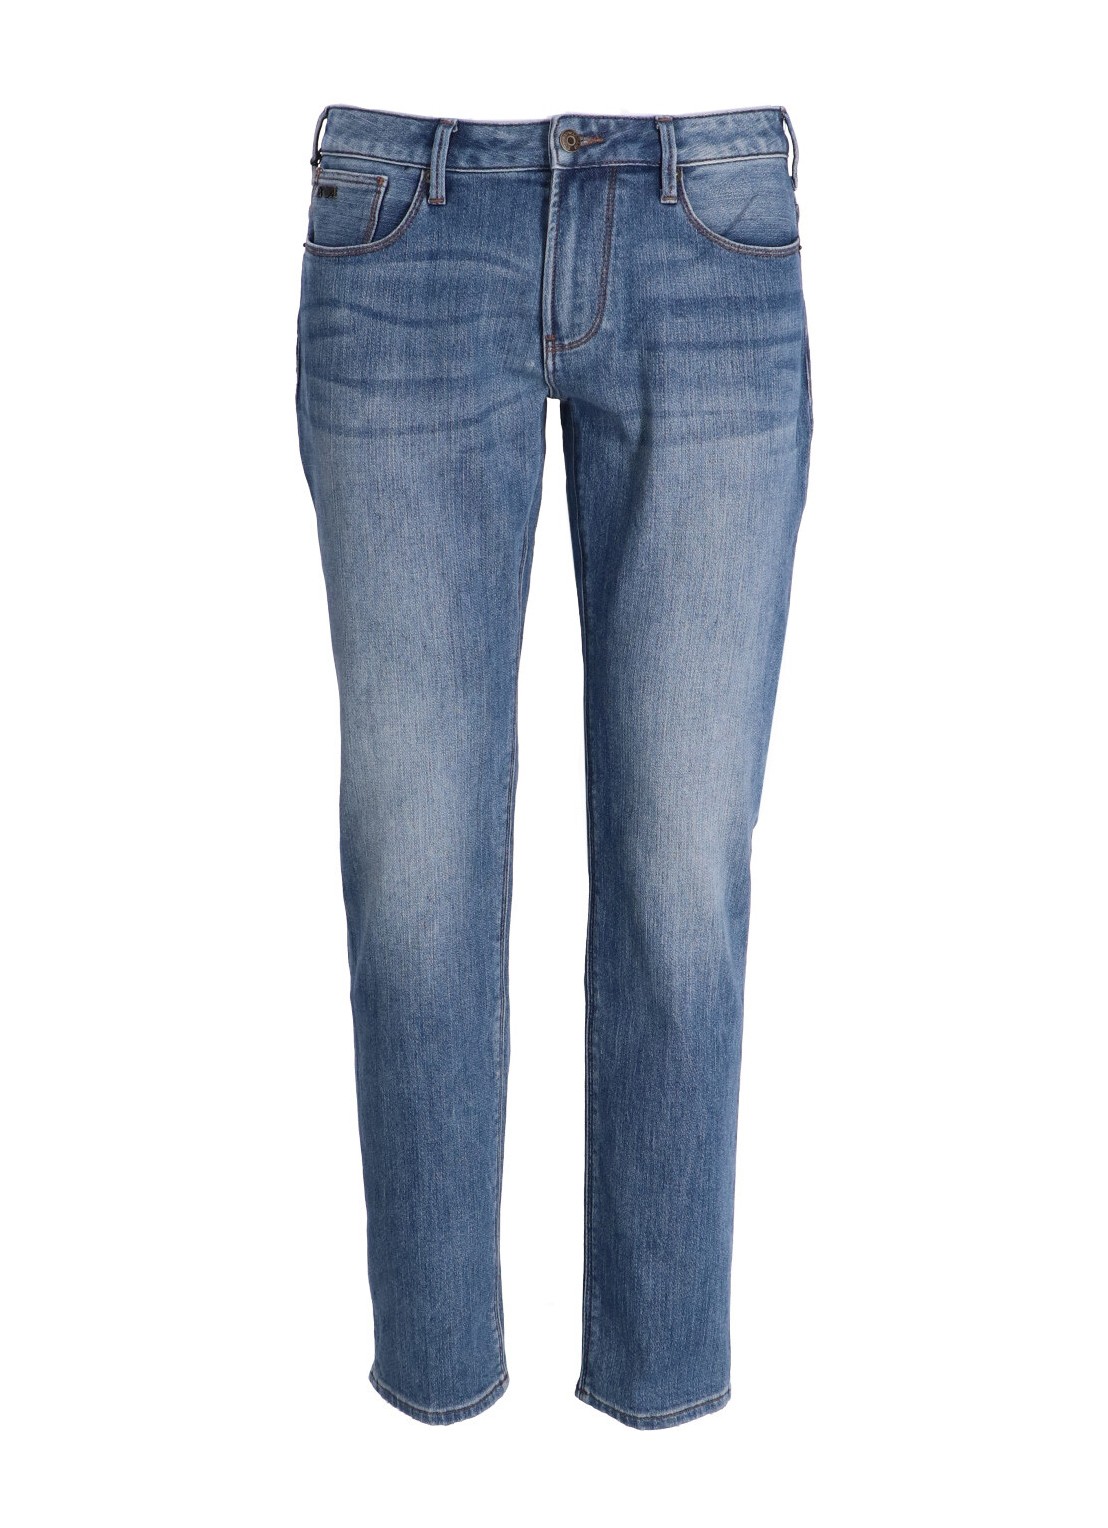 Pantalon jeans emporio armani denim man j06 3d1j061drpz 0943 talla Azul
 